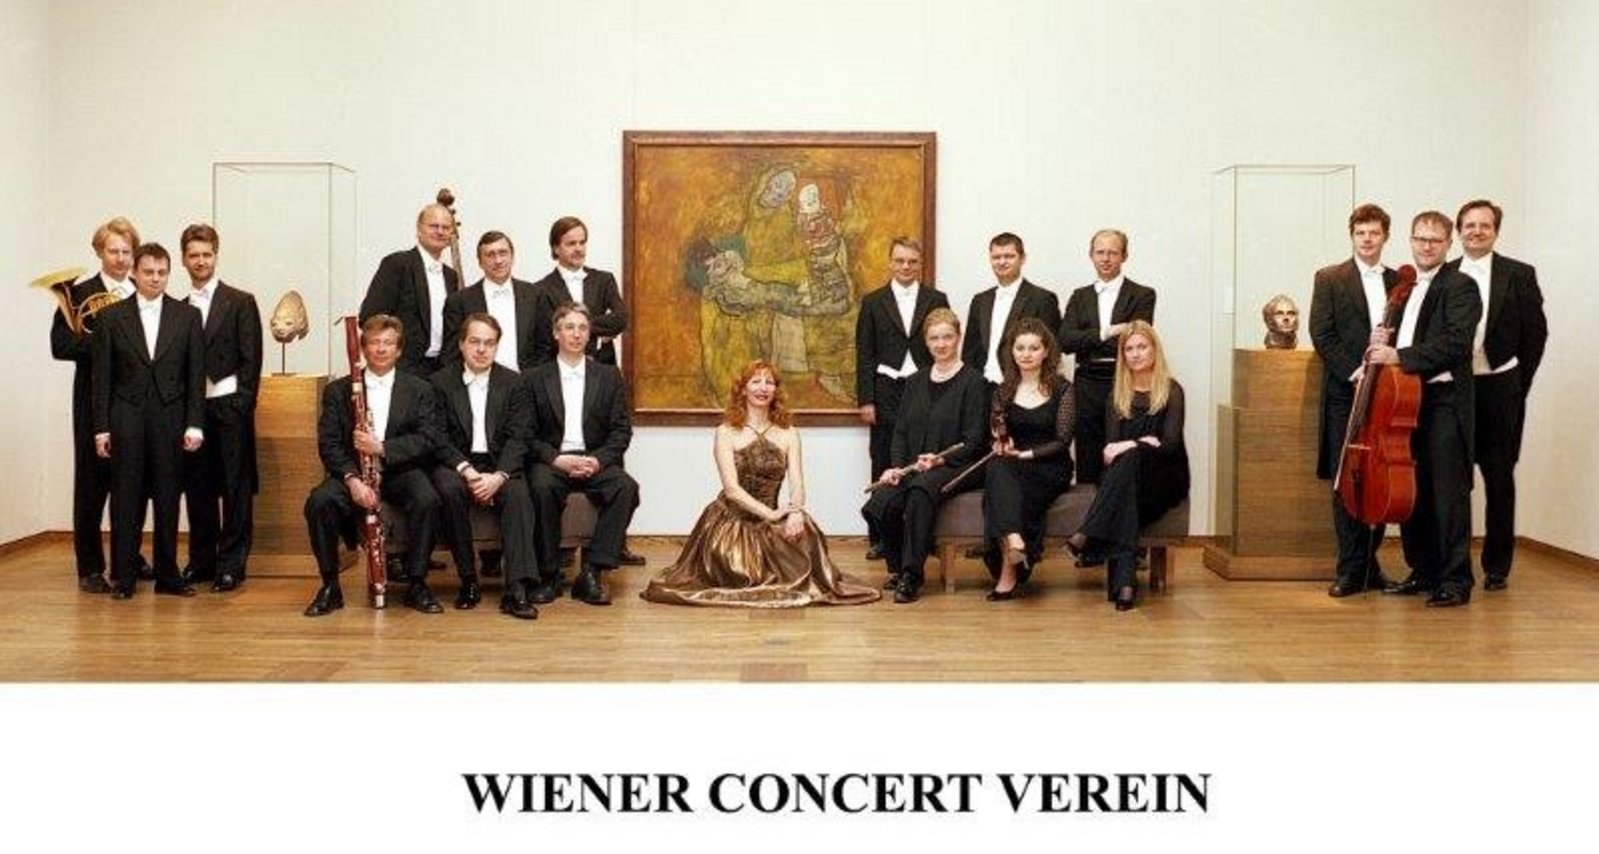 Wiener Concert-Verein, (c) Max Dobrovich